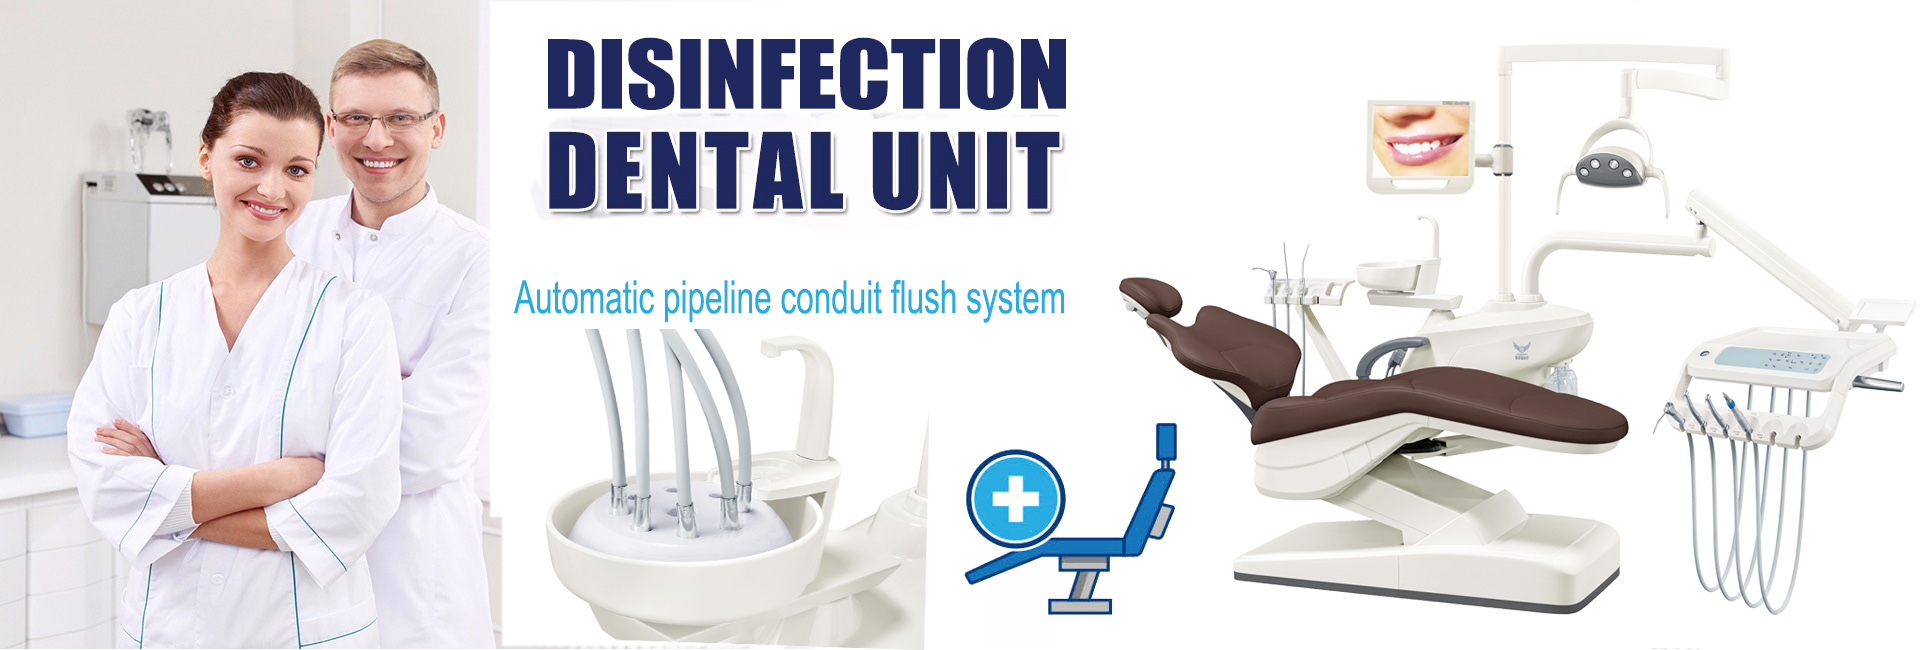 disinfection dental unit